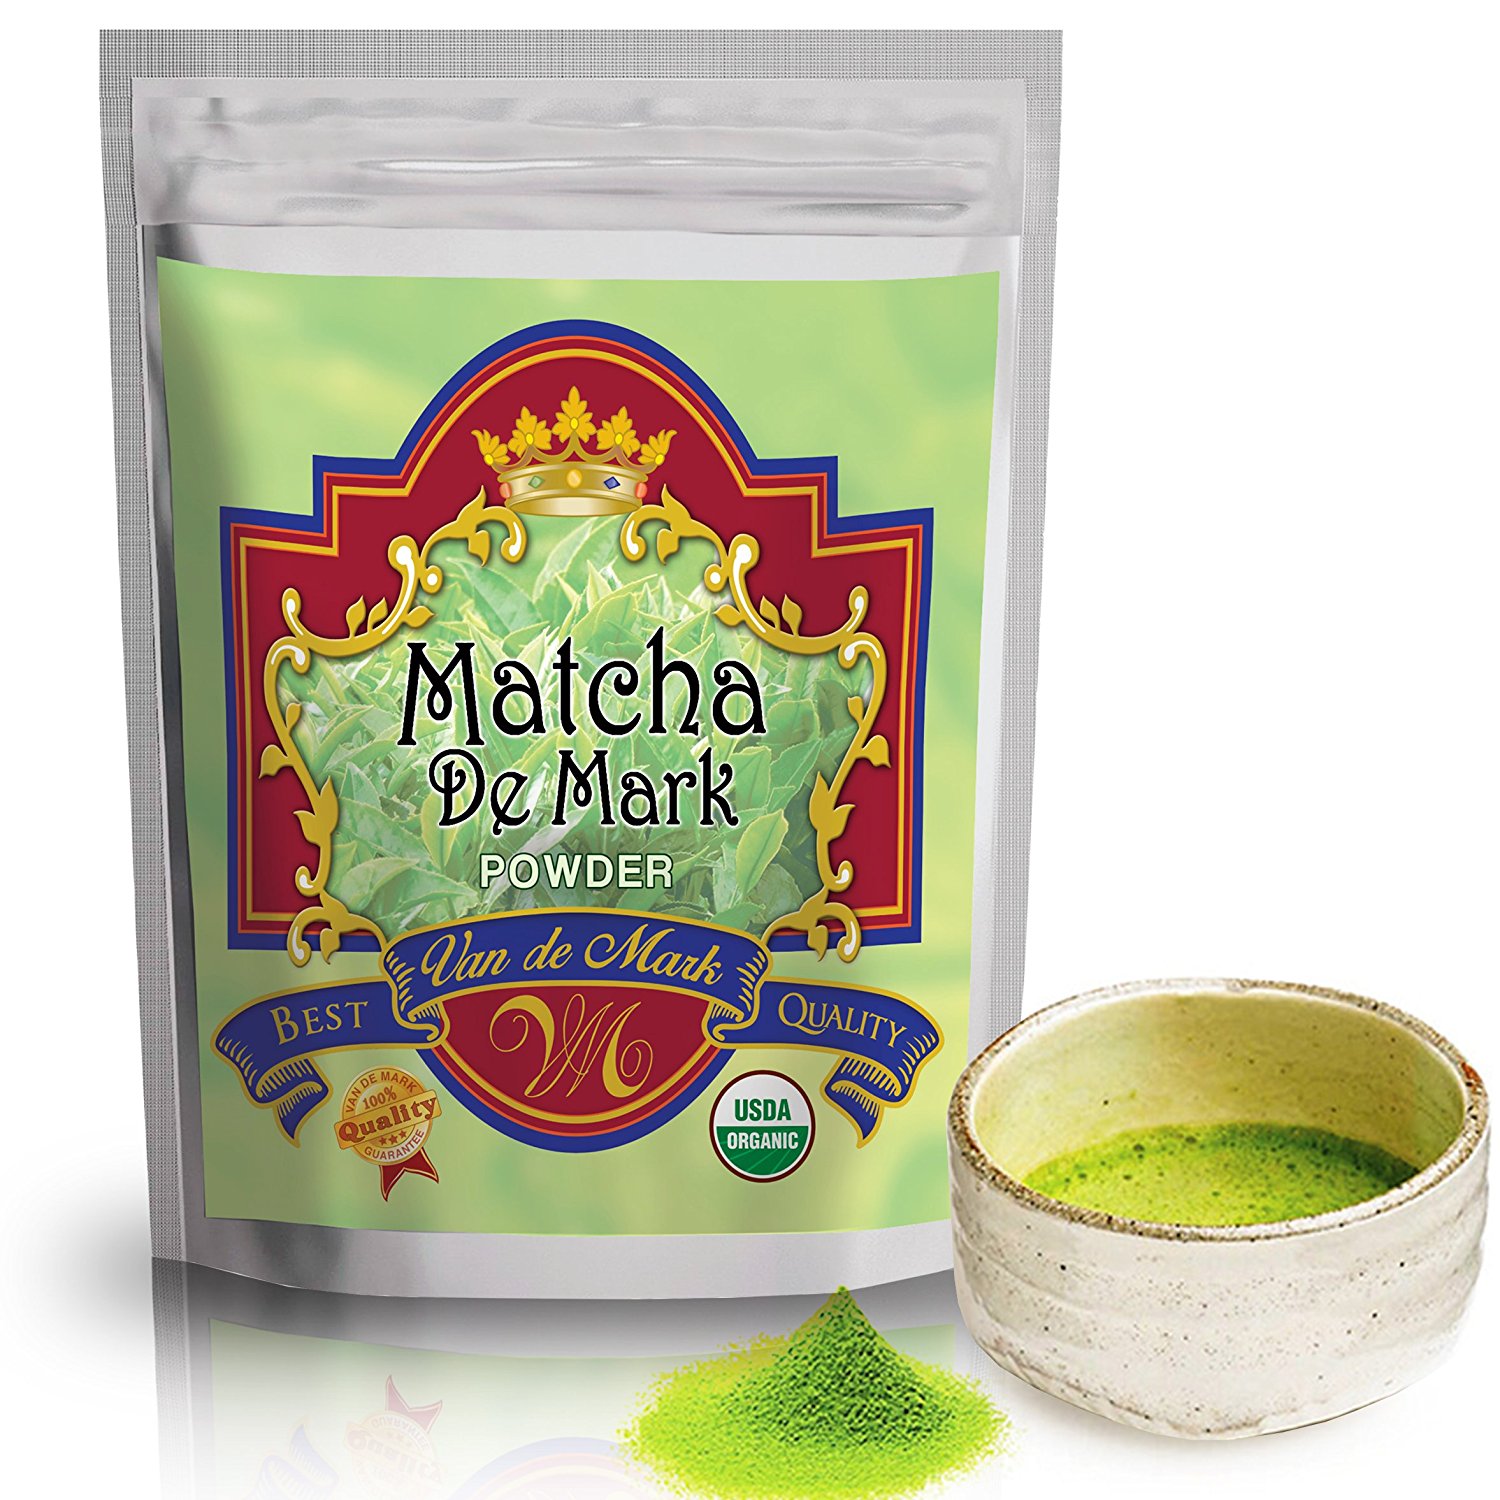 USDA Organic Matcha Green Tea Powder (Full 5oz Size) By Matcha De Mark- Excellent Metabolism Booster